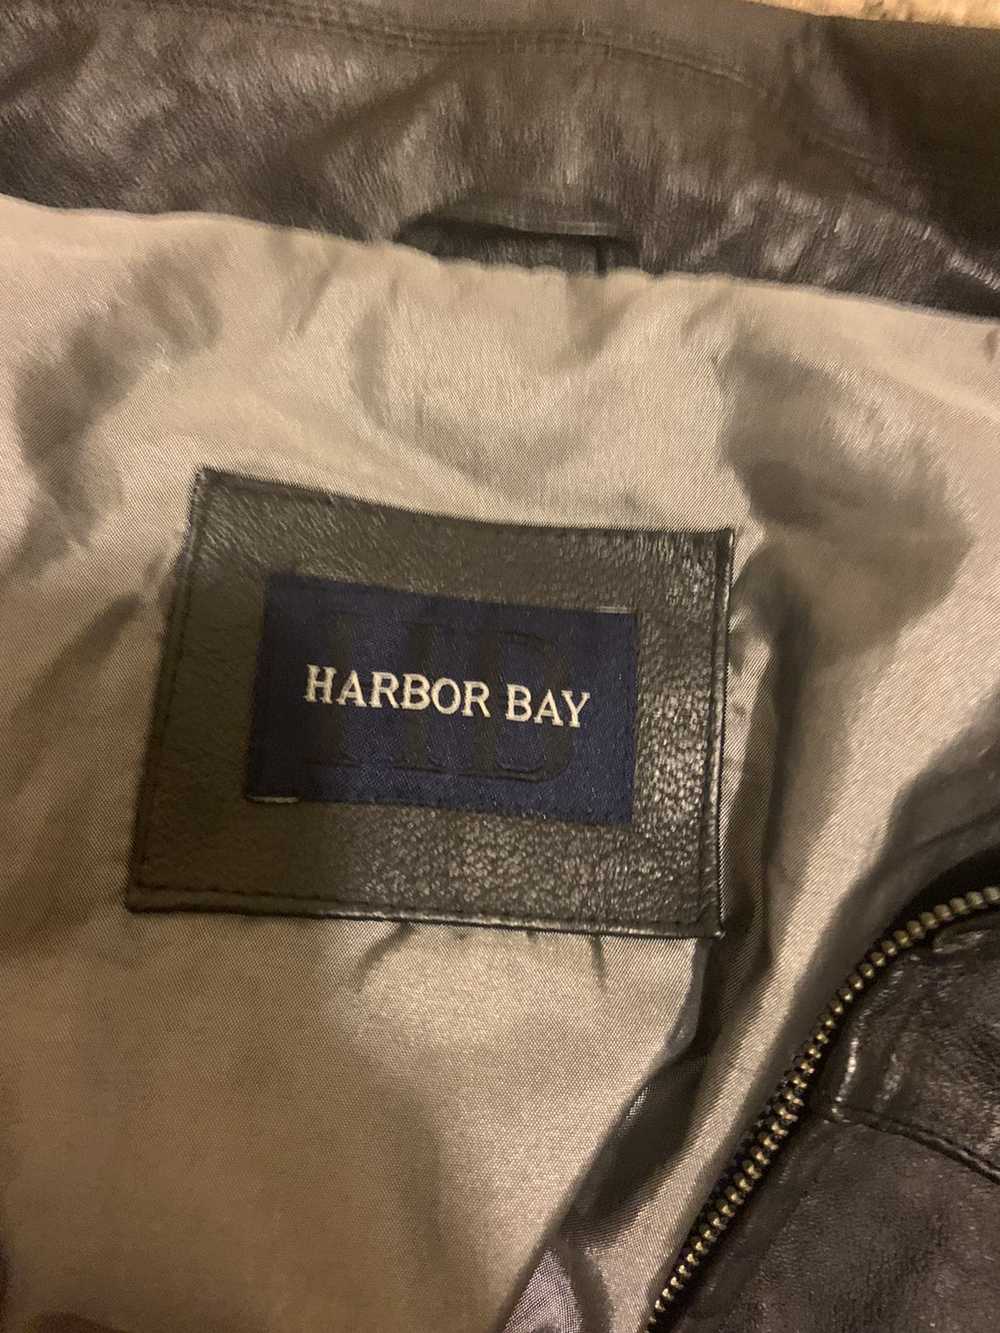 Vintage Harbor bay leather jacket - image 4